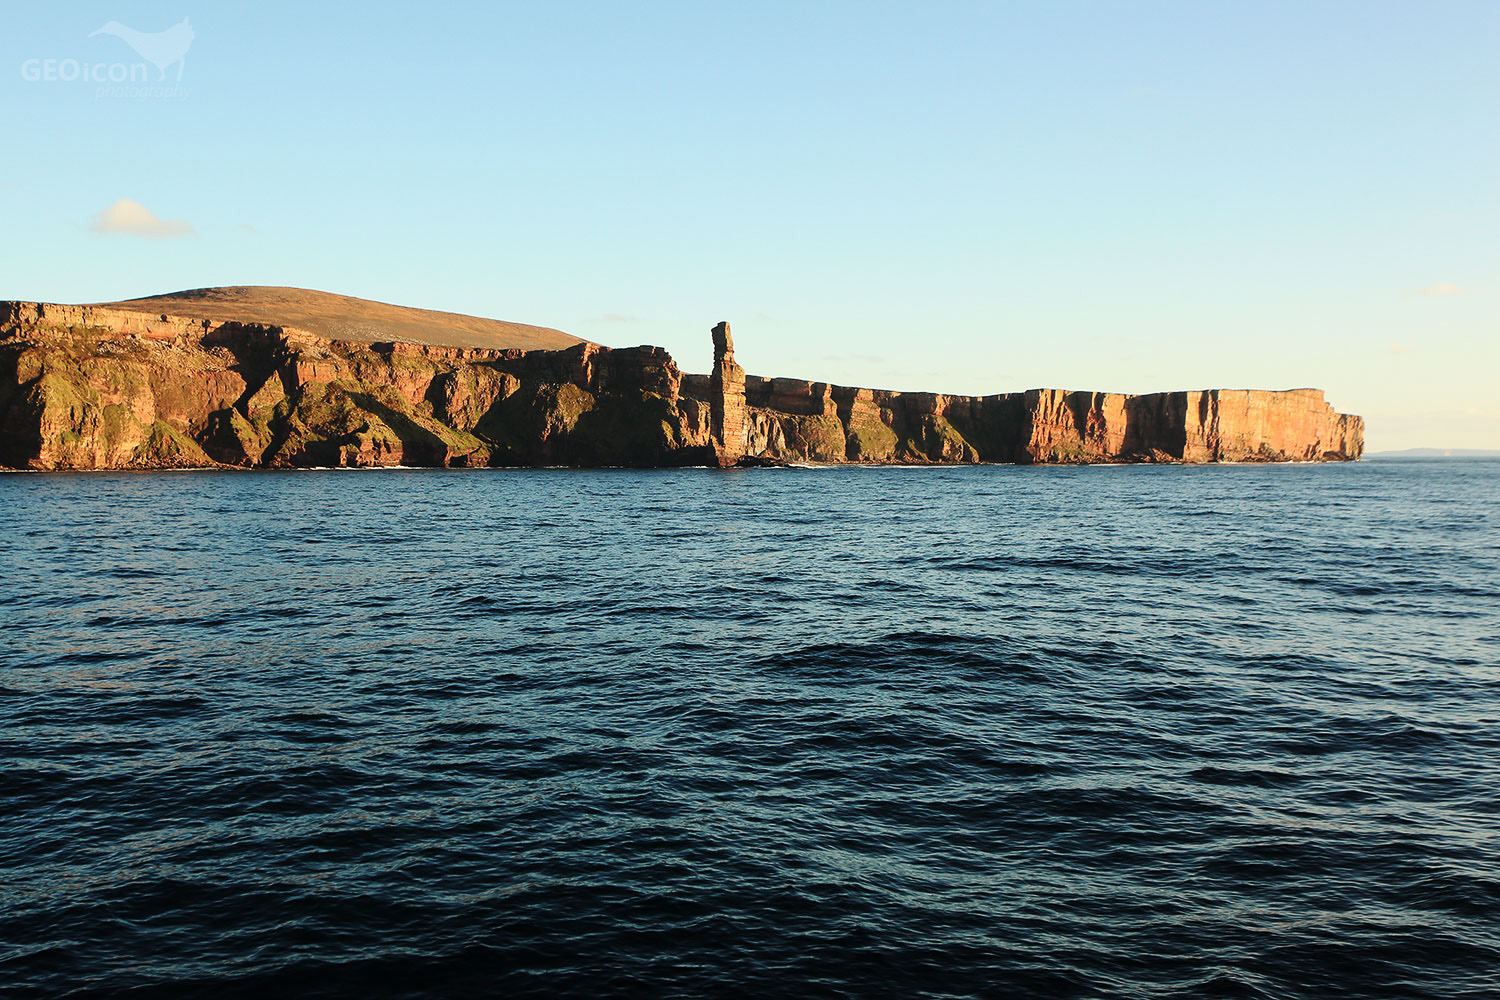 Hoy island, The Old man, Orkneys islands, Scotland.